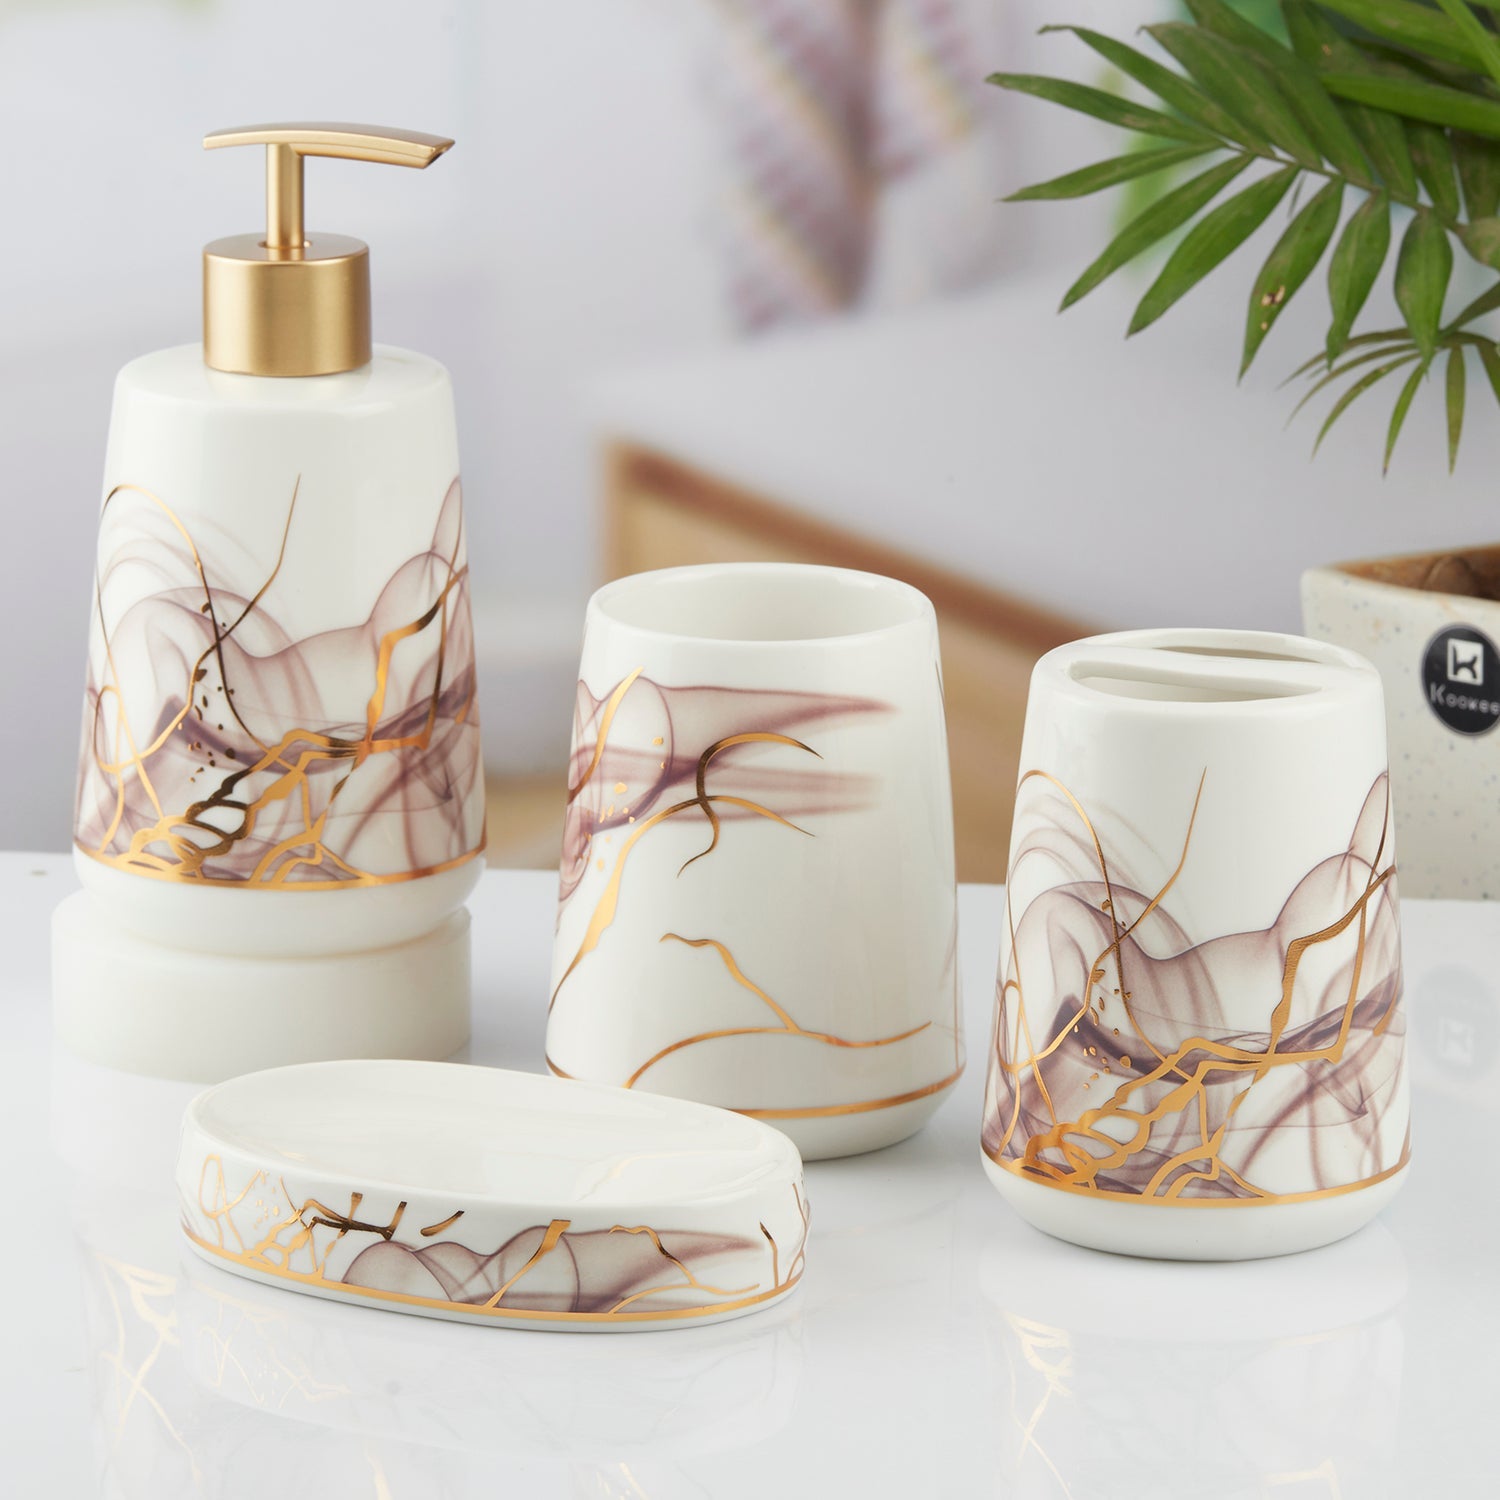 Ceramic Bathroom Set of 4 with Soap Dispenser (10456)